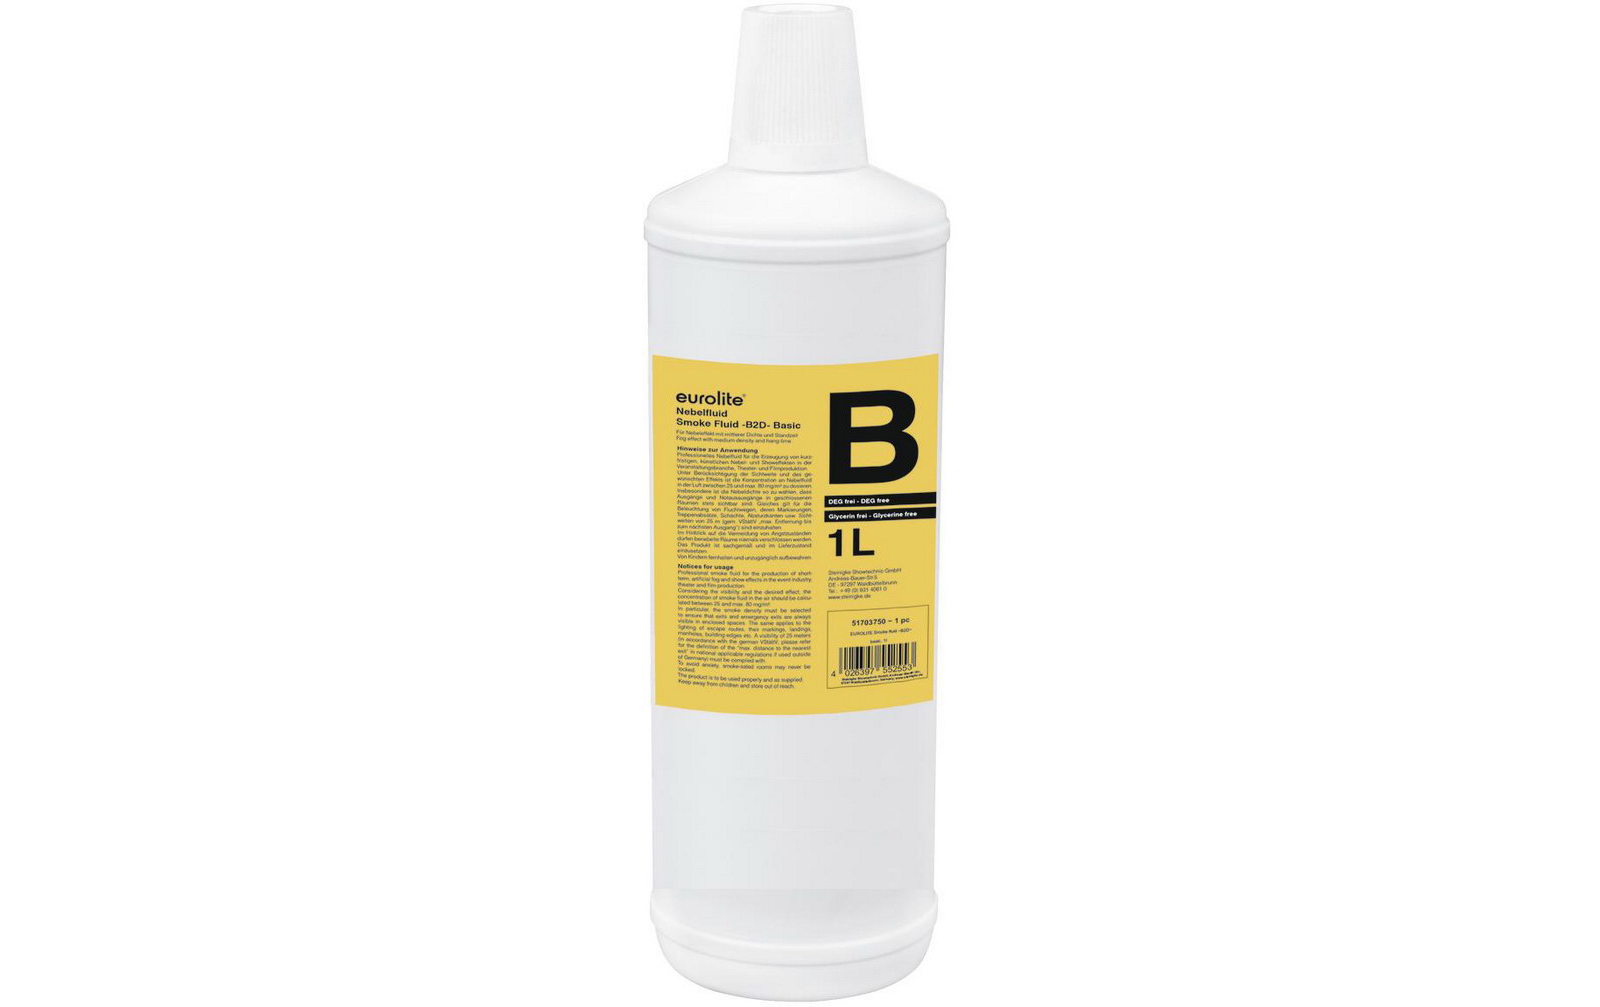 Eurolite Smoke Fluid -B2D- Basic Nebelfluid 1l von Eurolite